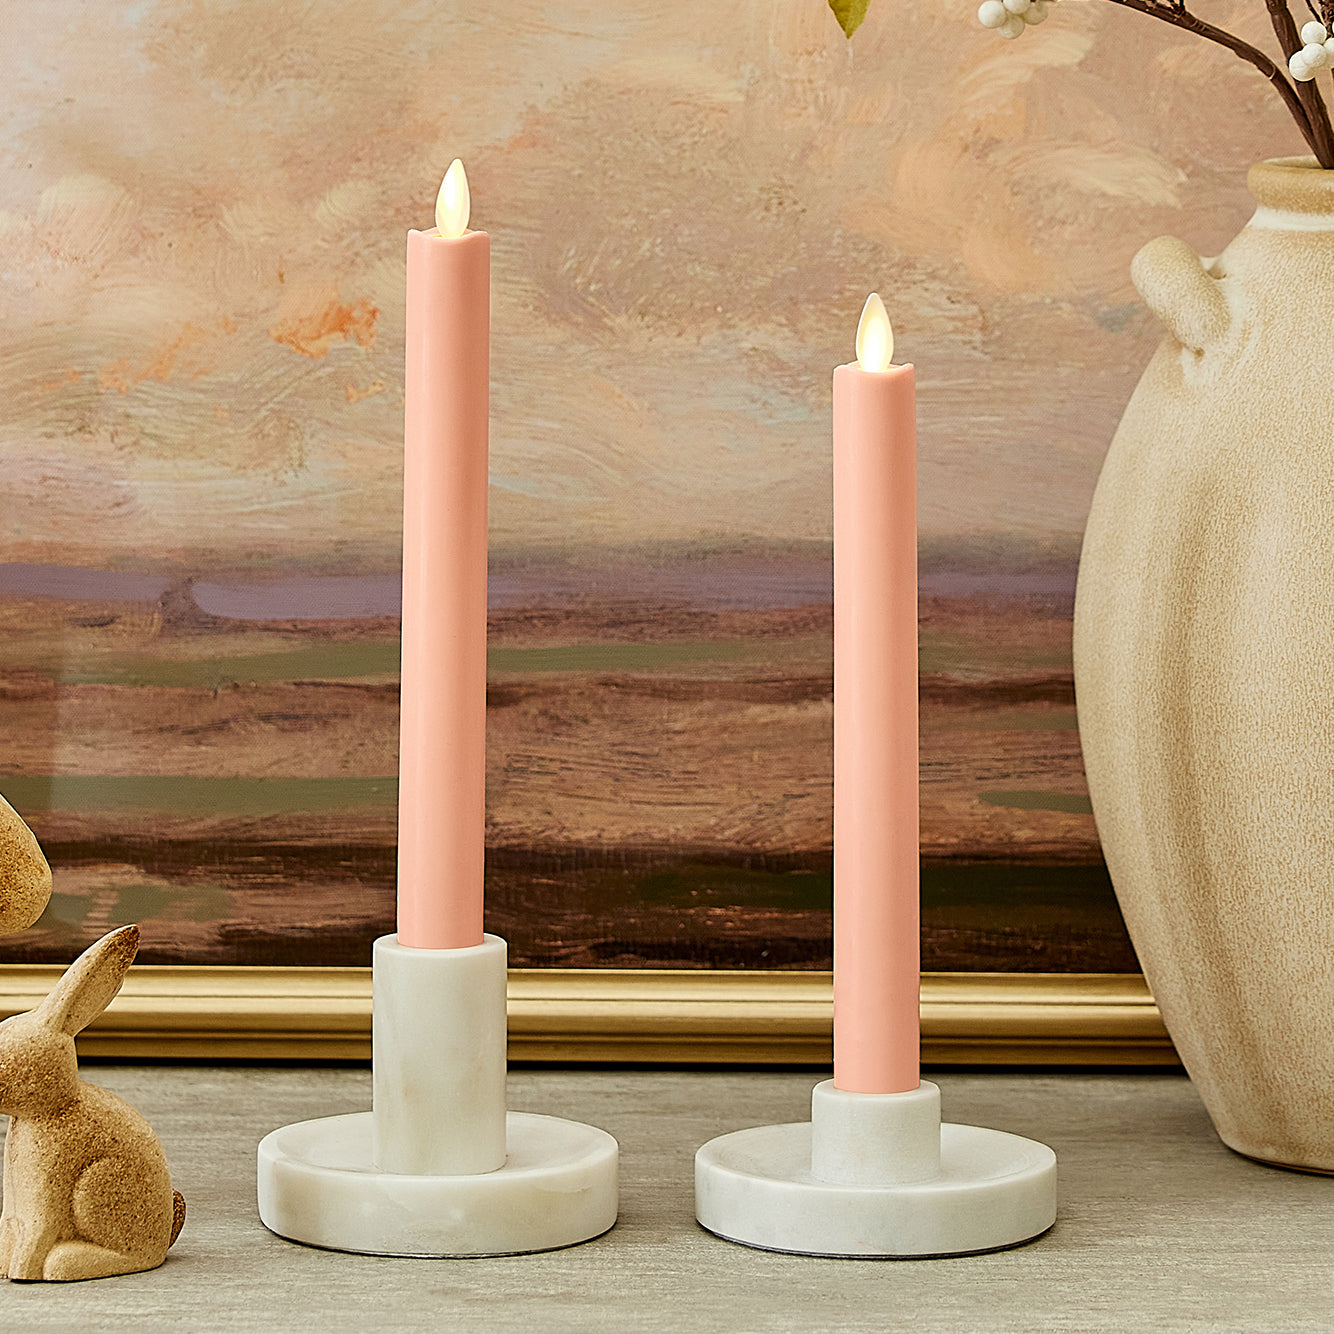 An image of Luminara's peach taper candles